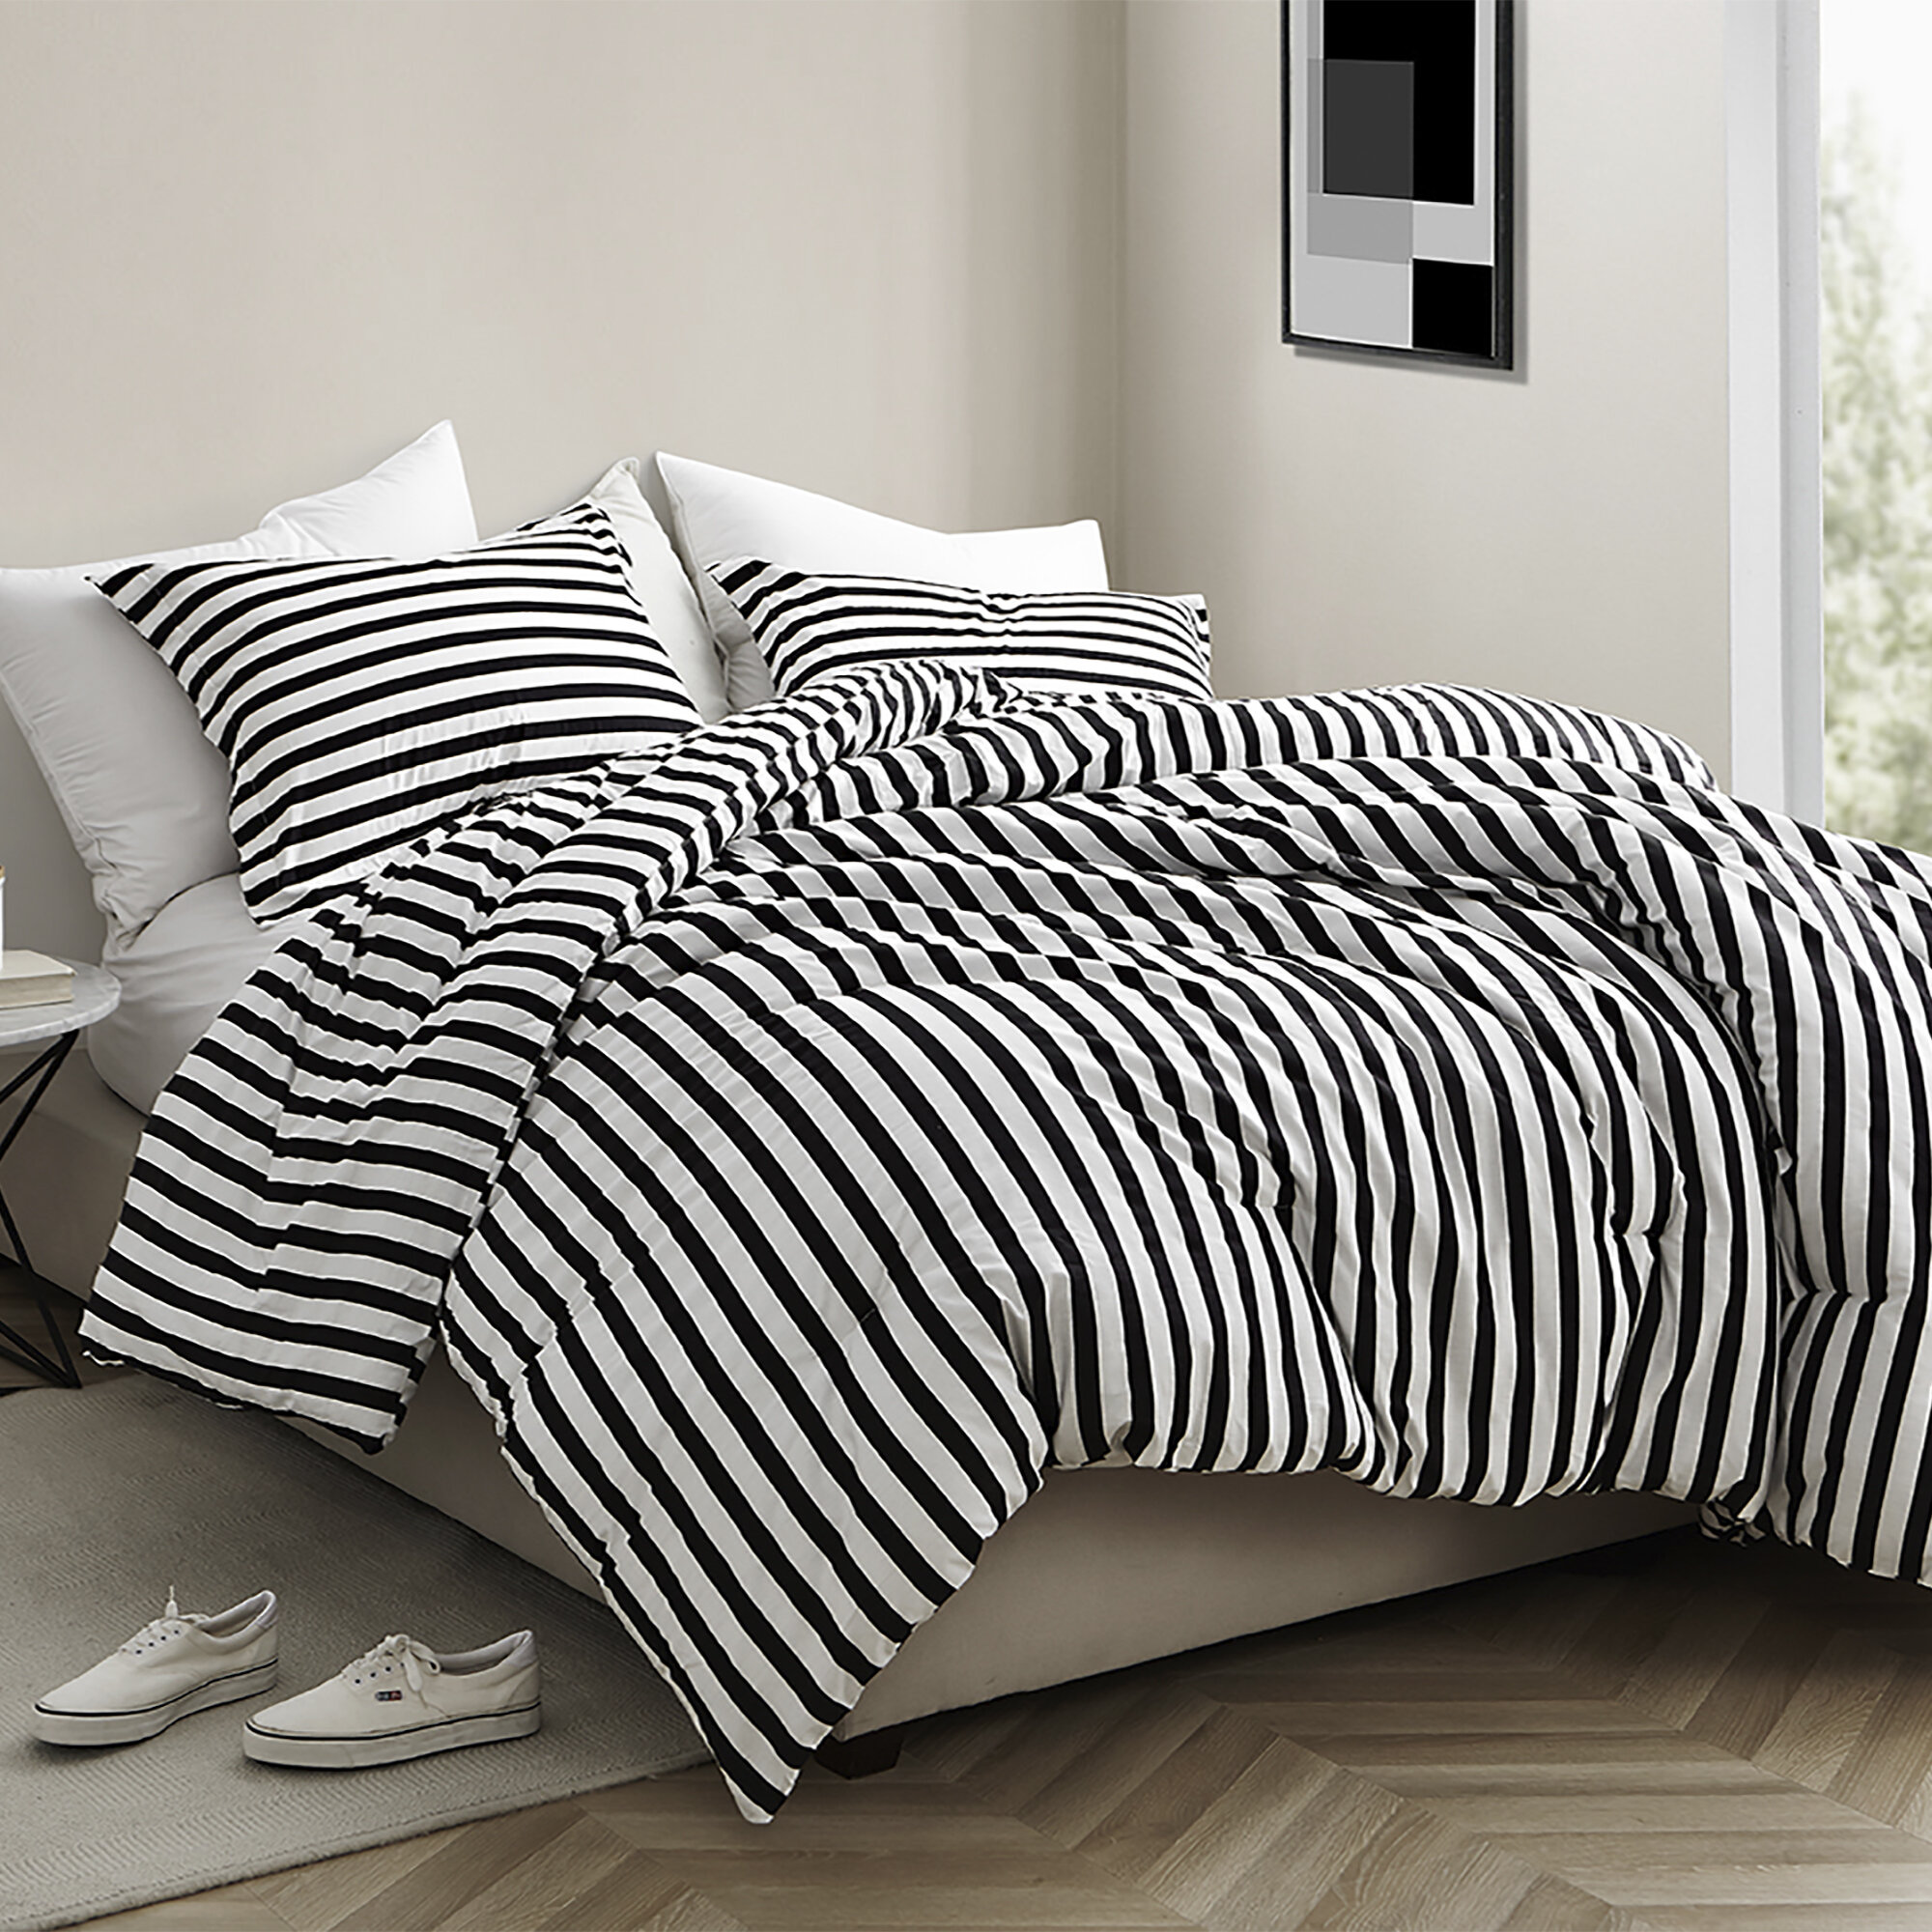 Wrought Studio Dorcaster Striped Comforter Set Reviews Wayfair